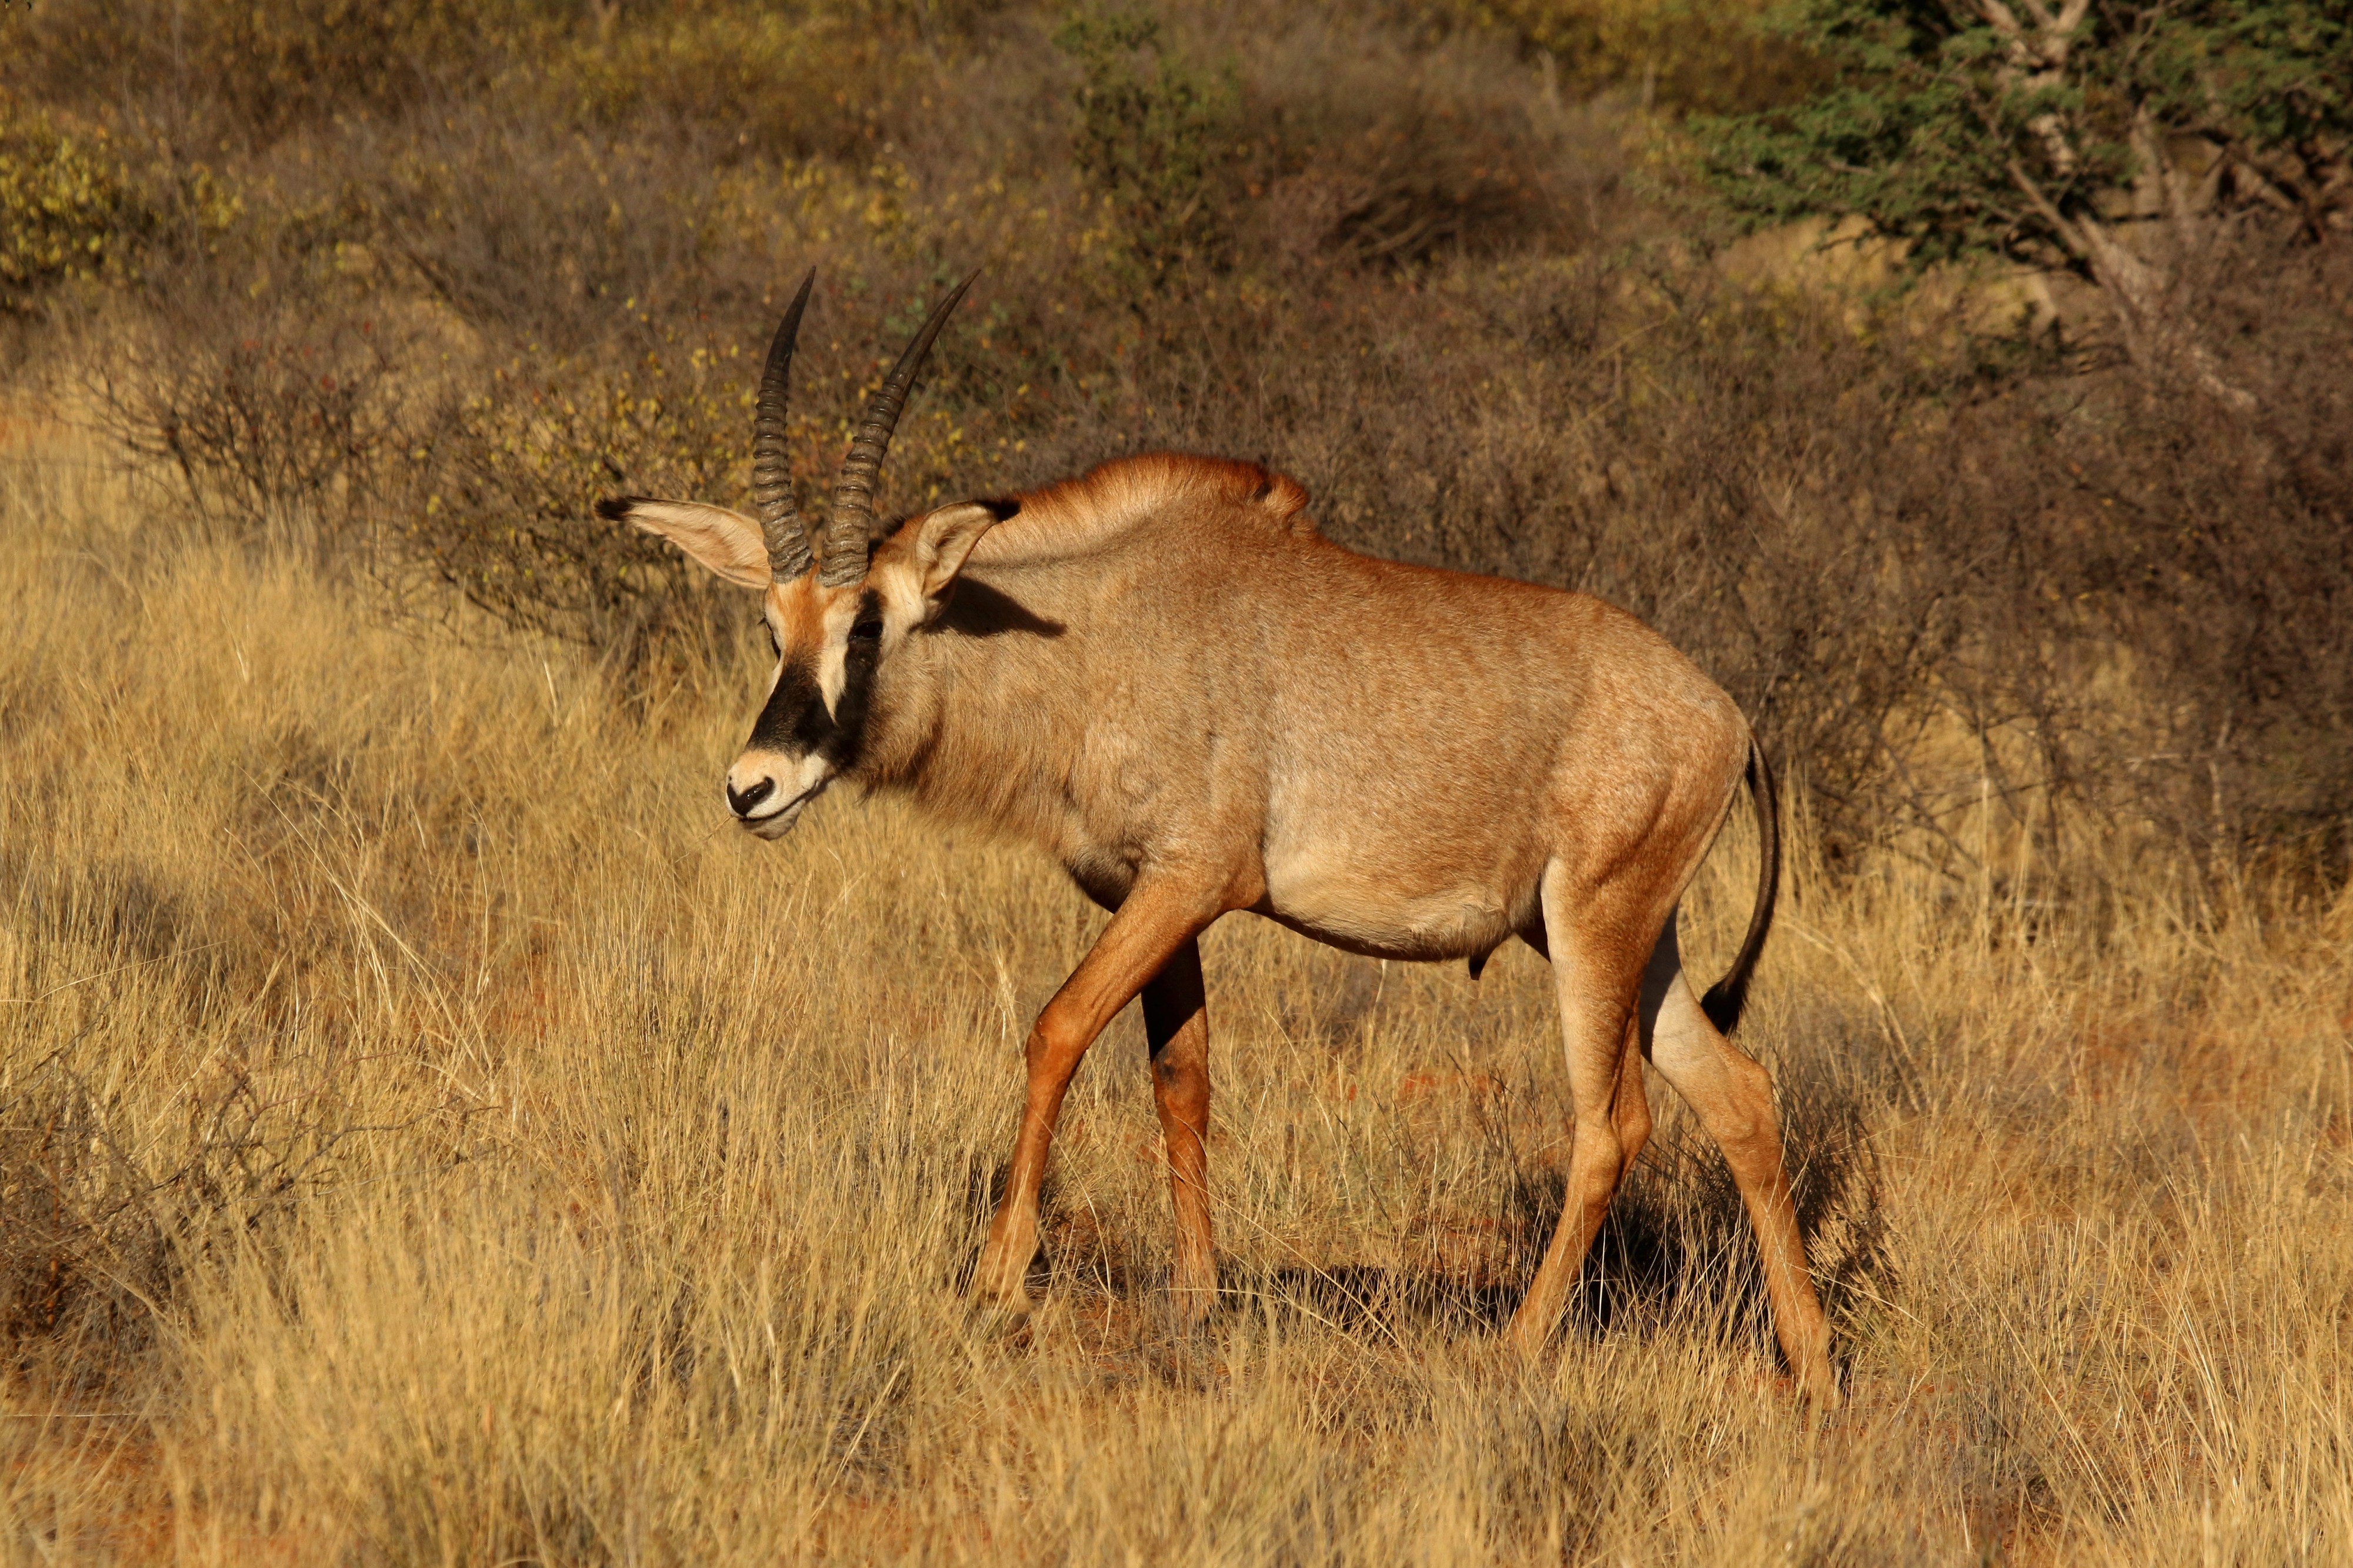 Roan antelope (Hippotragus equinus) male walking